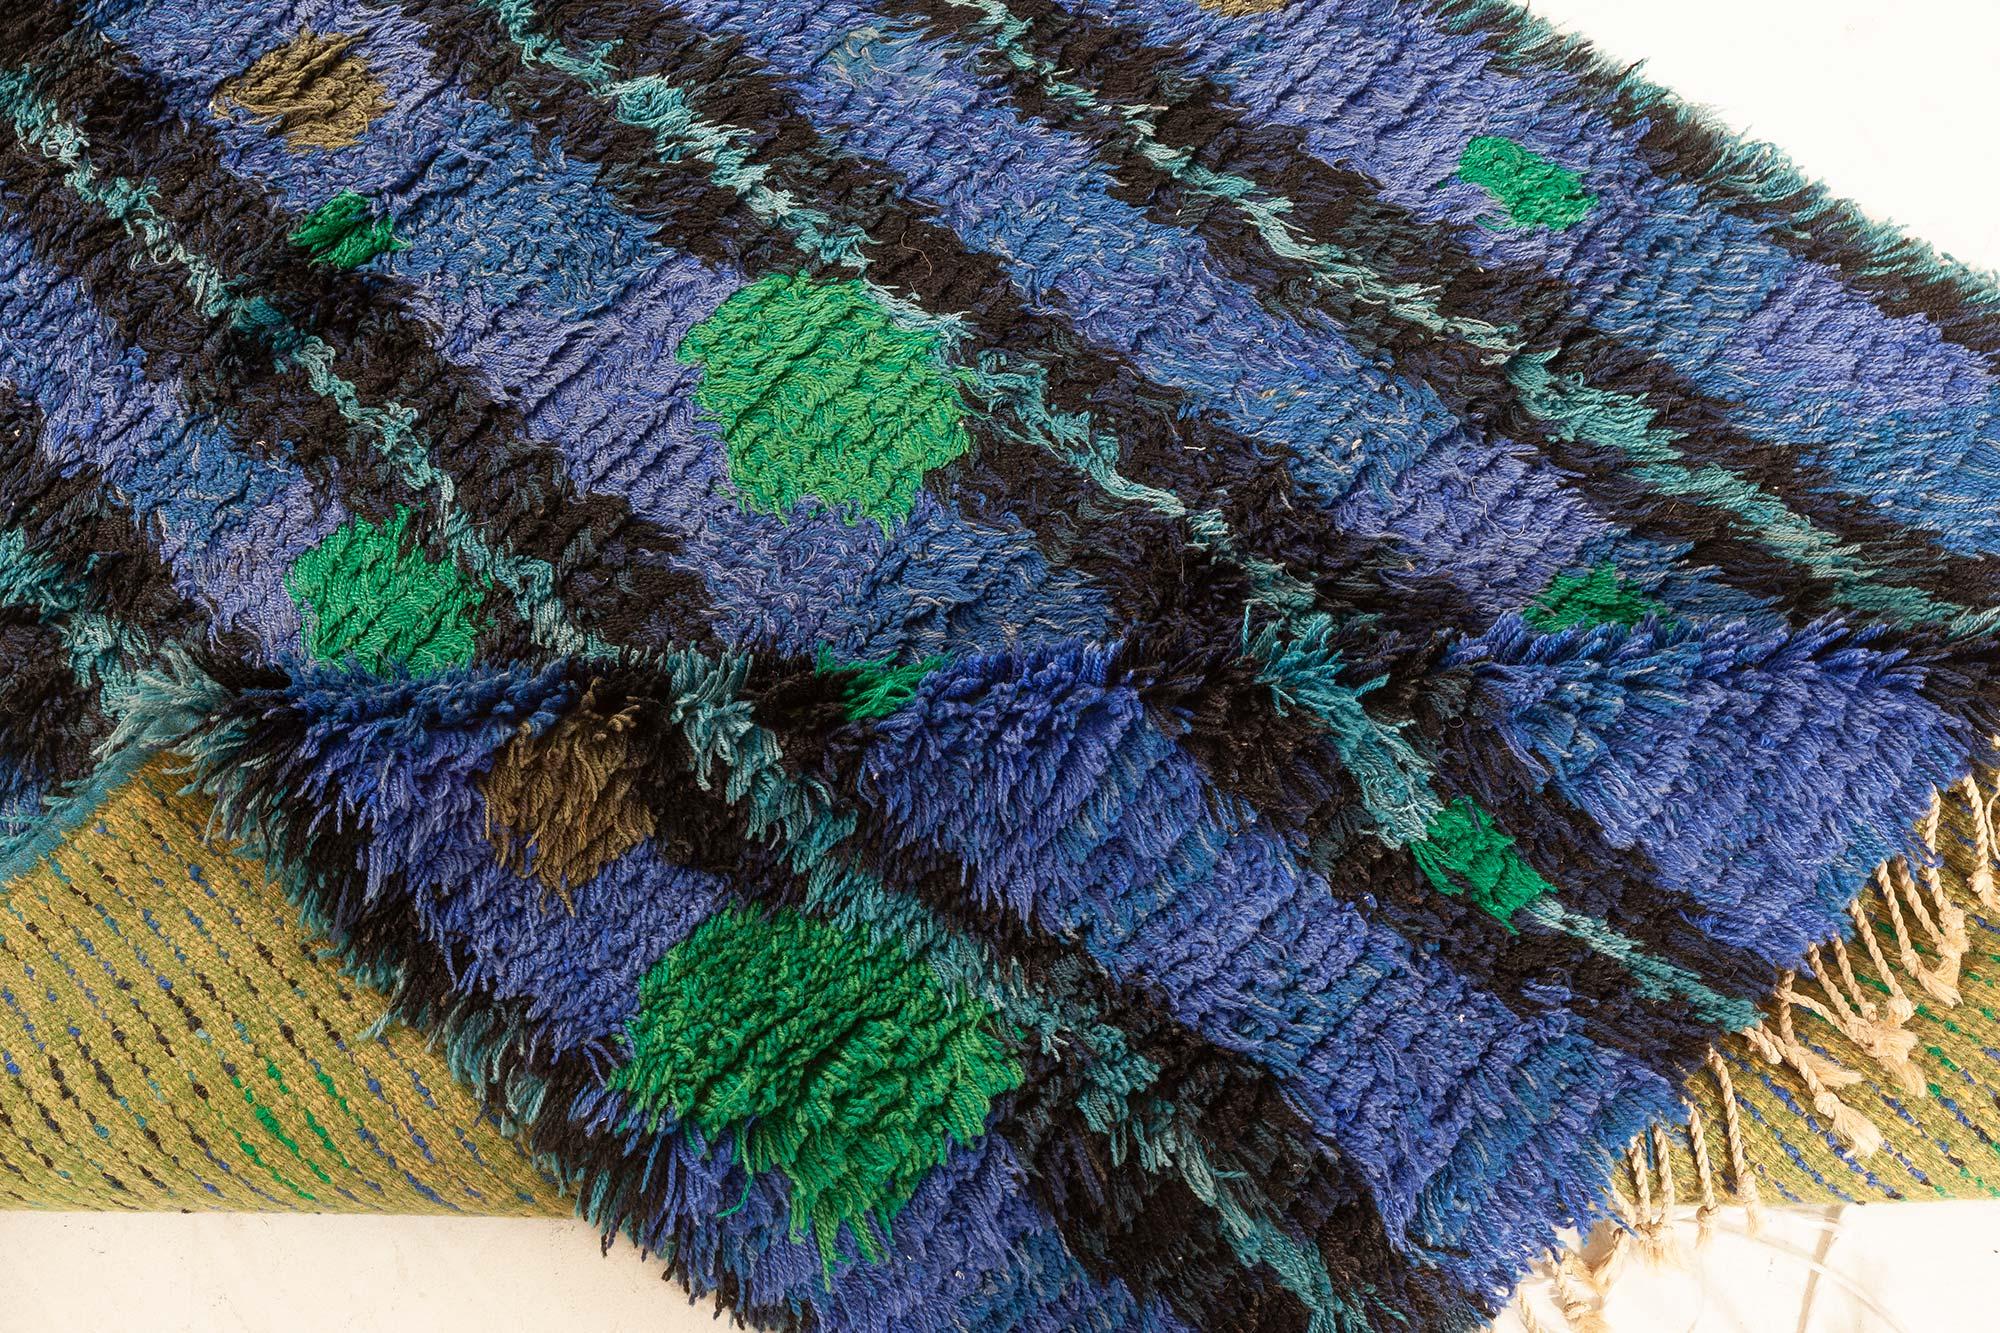 Wool Mid-20th Century Modern Swedish Rya Green, Blue Rug For Sale